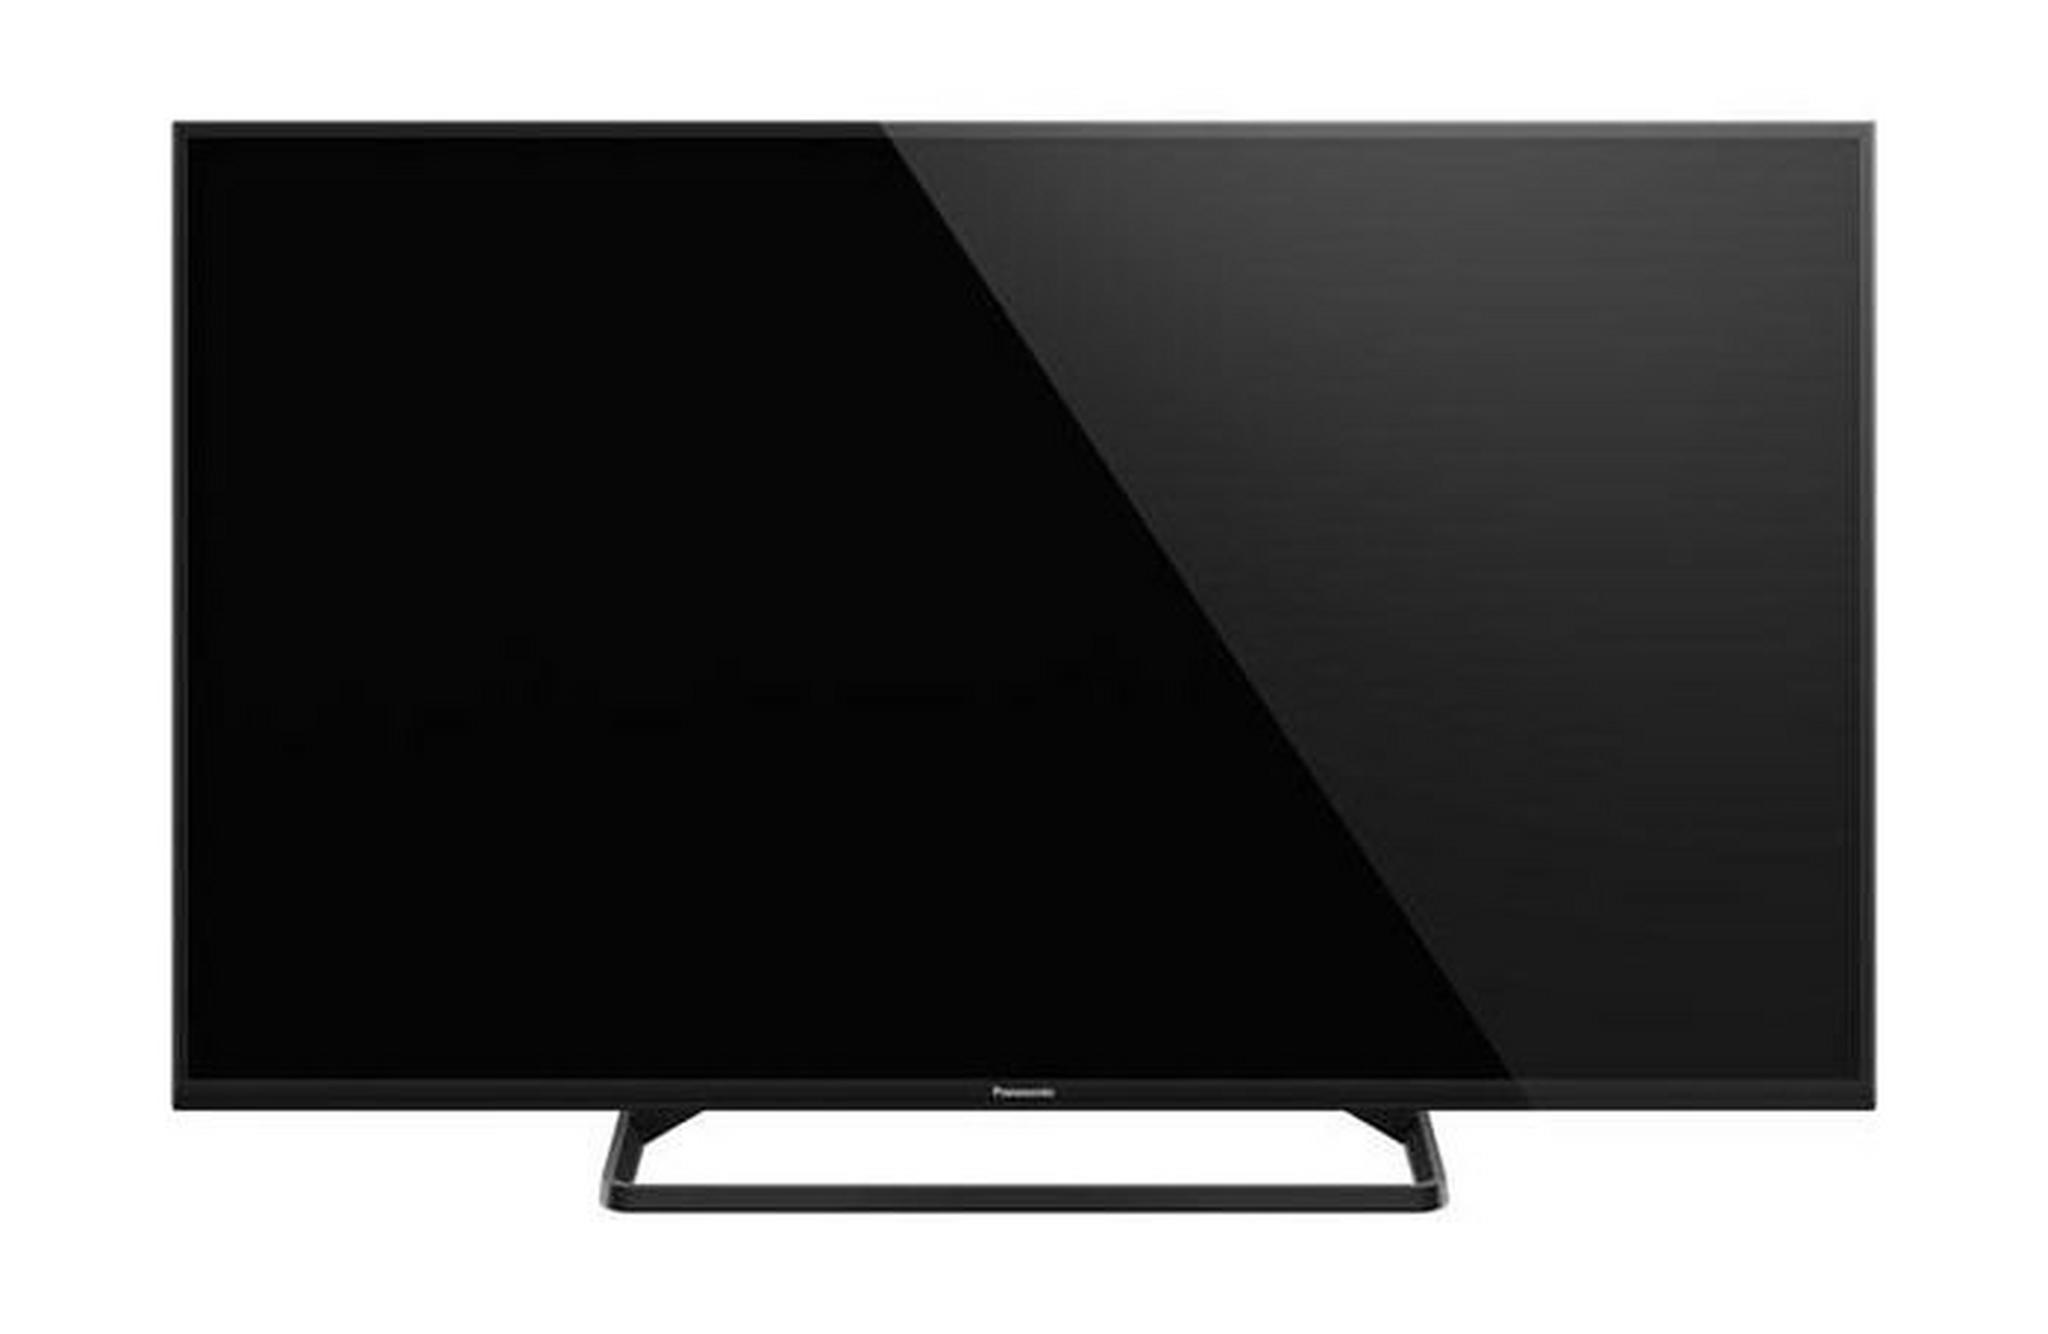 Panasonic TV 50-inch Full HD Standard LED (TH-50A410M) - Black